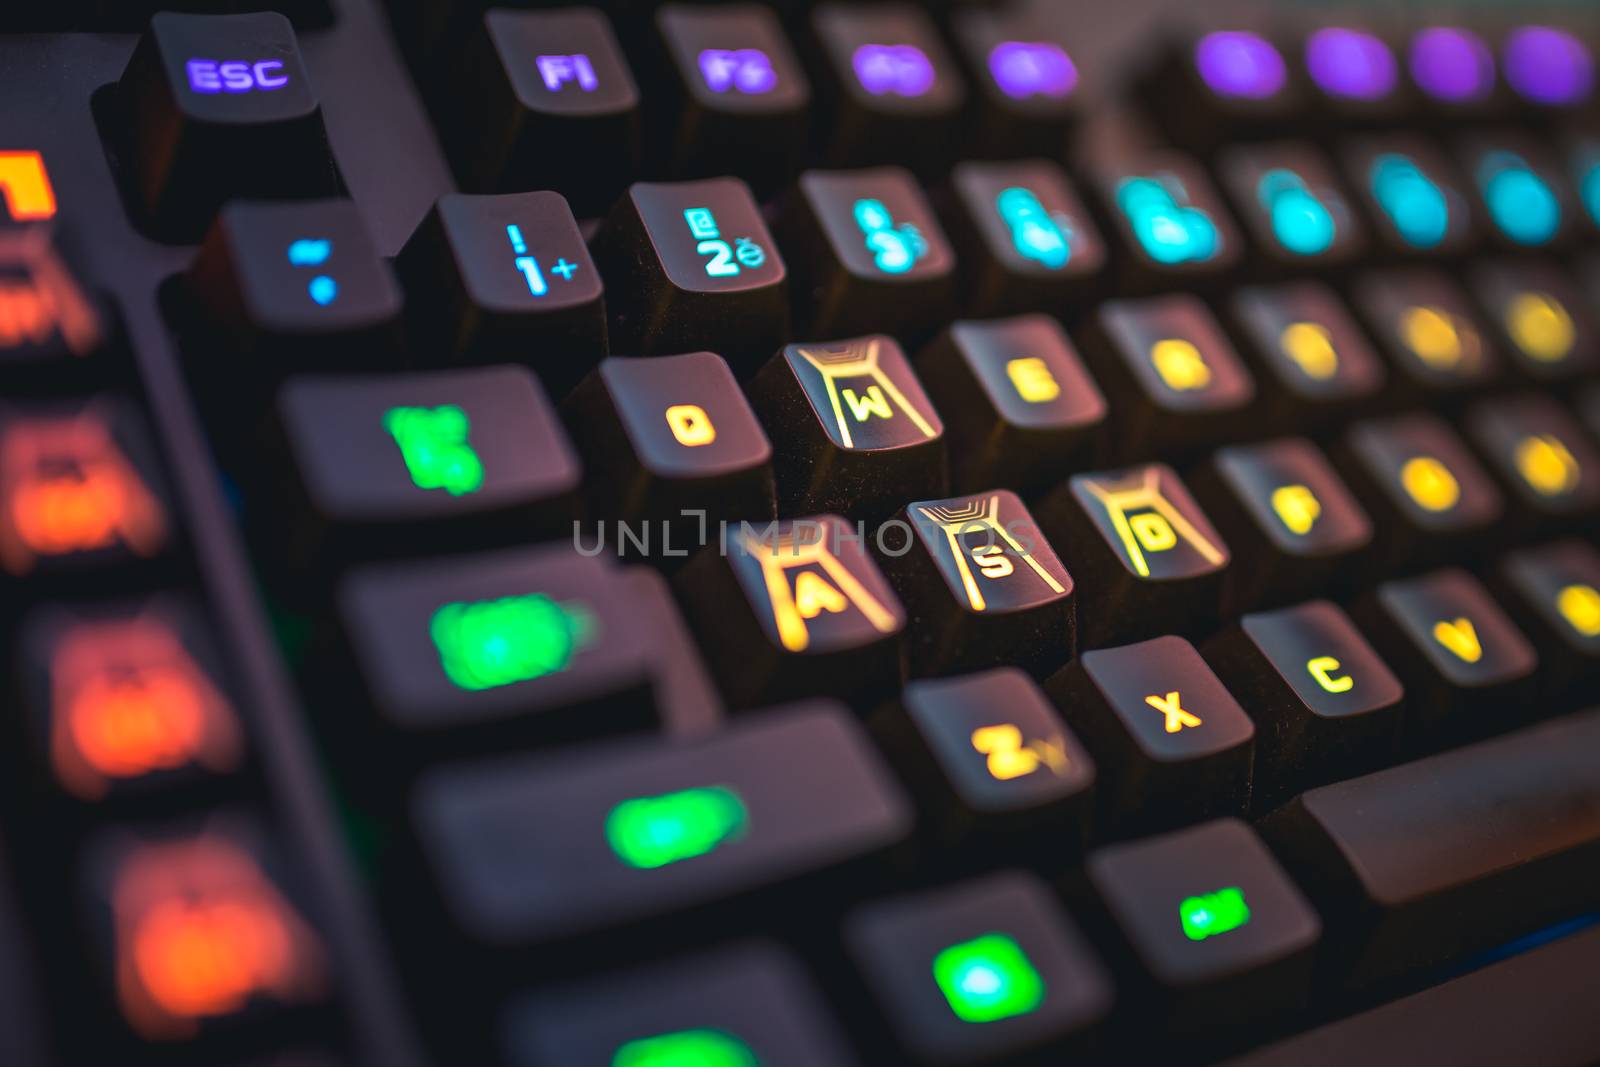 Romer-G backlit mechanical keyboard WSAD buttons detail shot. by petrsvoboda91